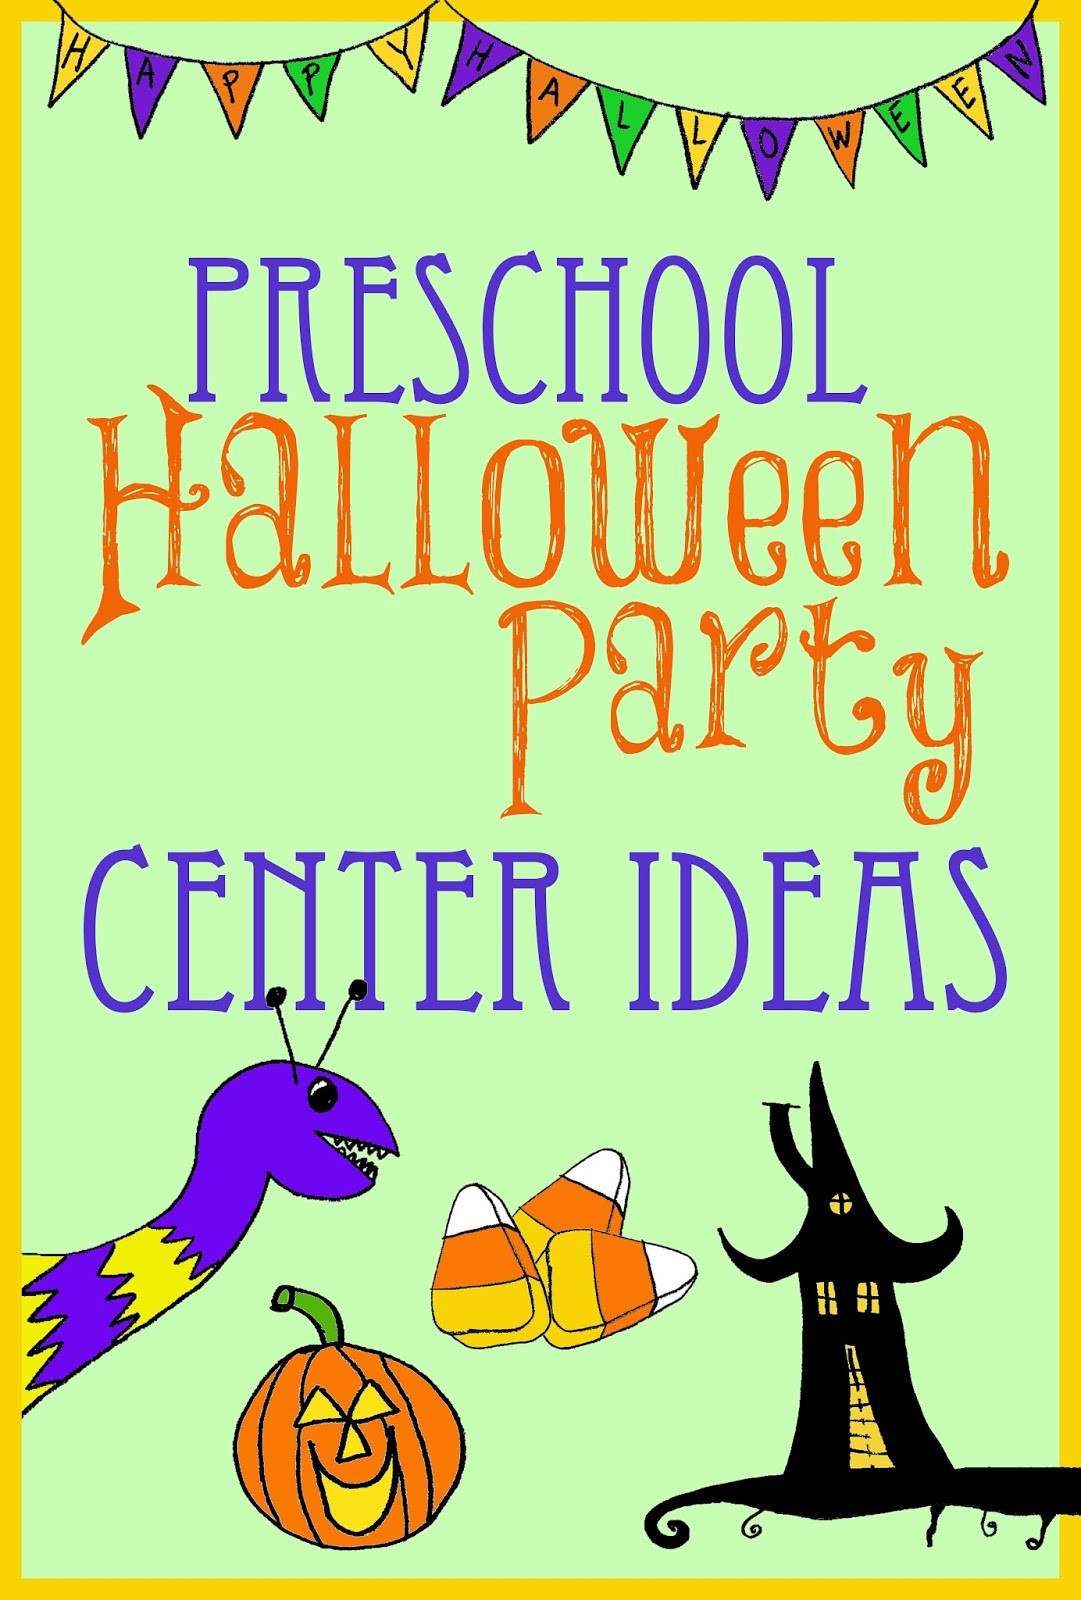 Preschool Halloween Party Ideas
 Halloween Party Center Ideas for Preschool Kindergarten